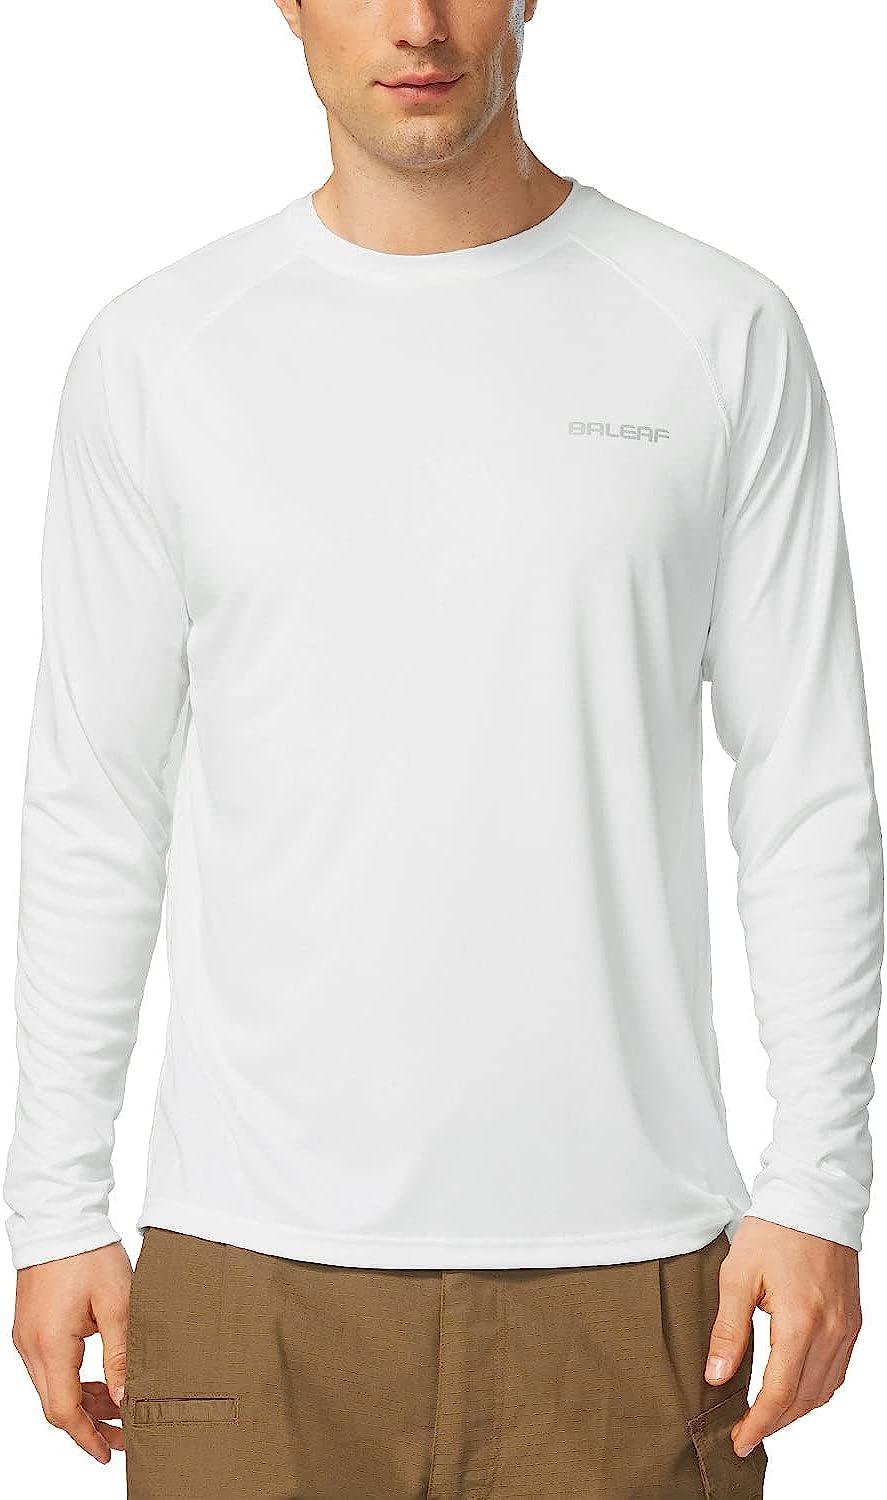 BALEAF Women's Long Sleeve Shirts UPF50+ Sun Protection Quick Dry